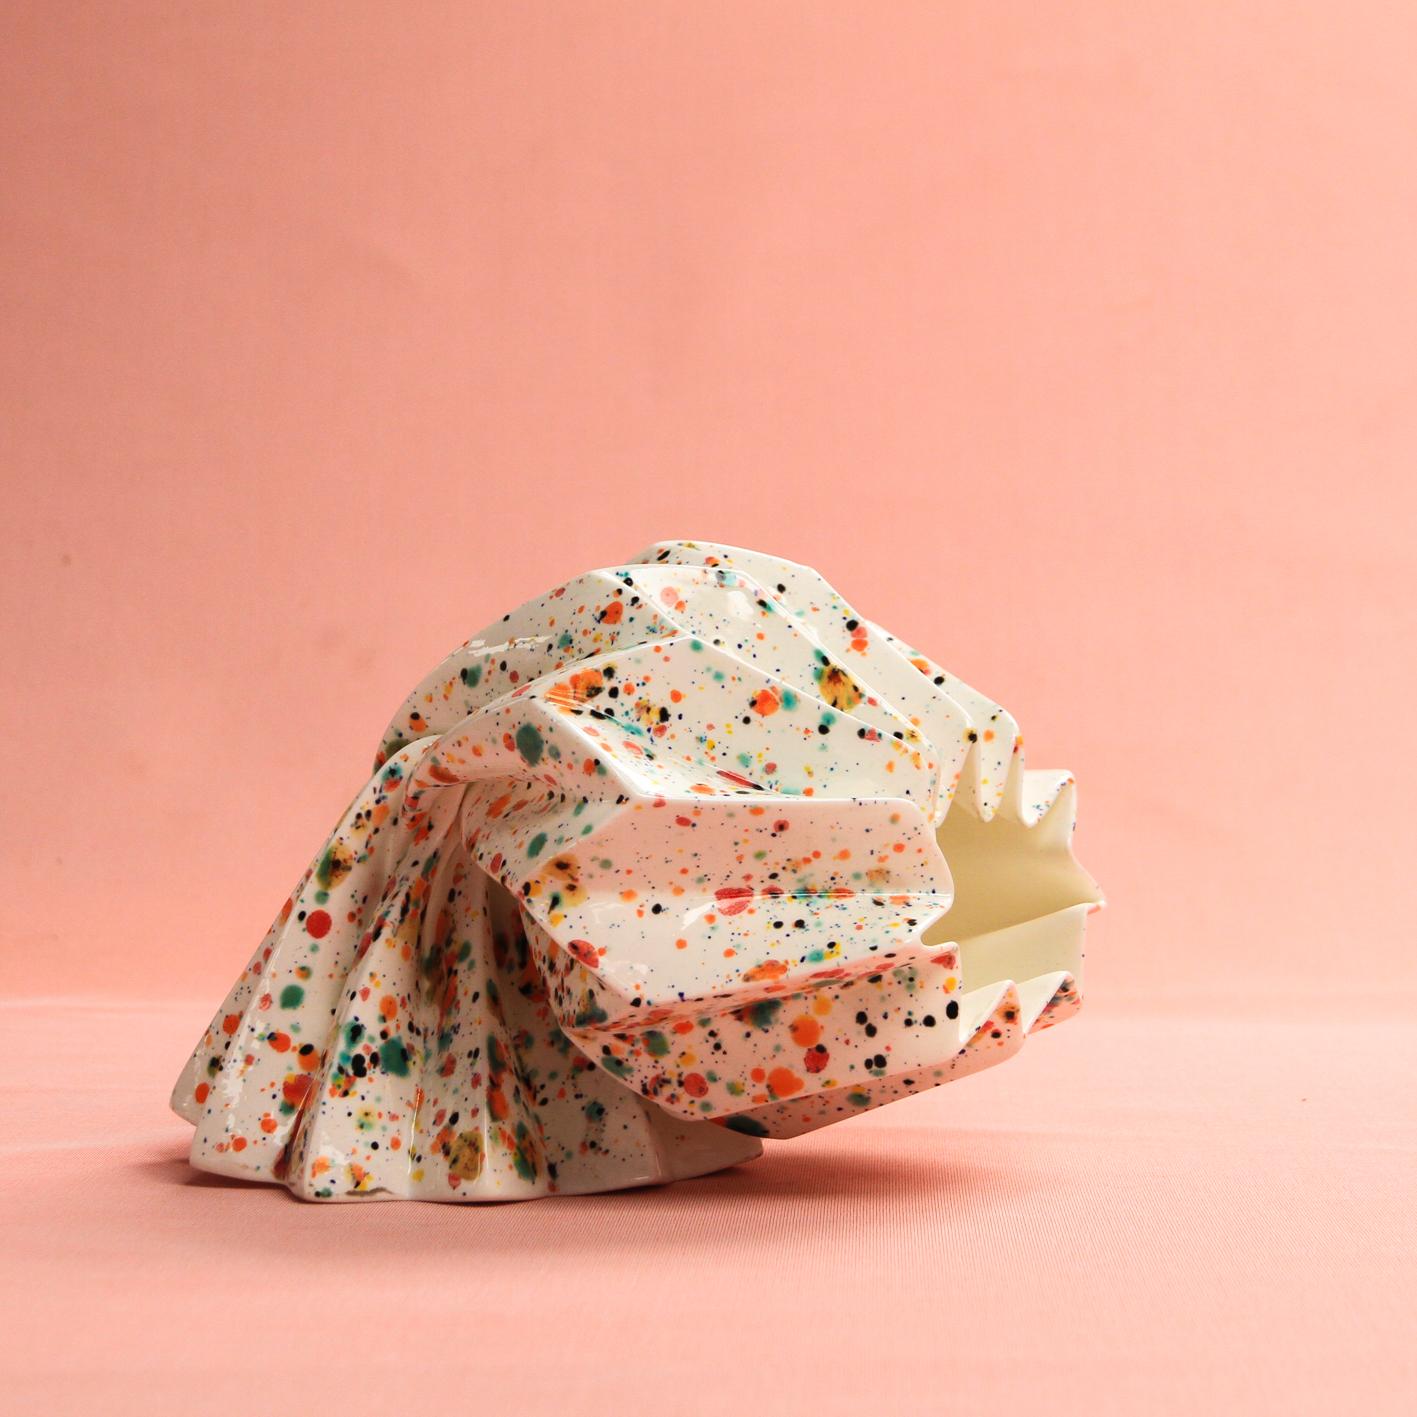 Fired “Slump” Origami Ceramic Vase Seafood Disco Special Edition by Studio Morison